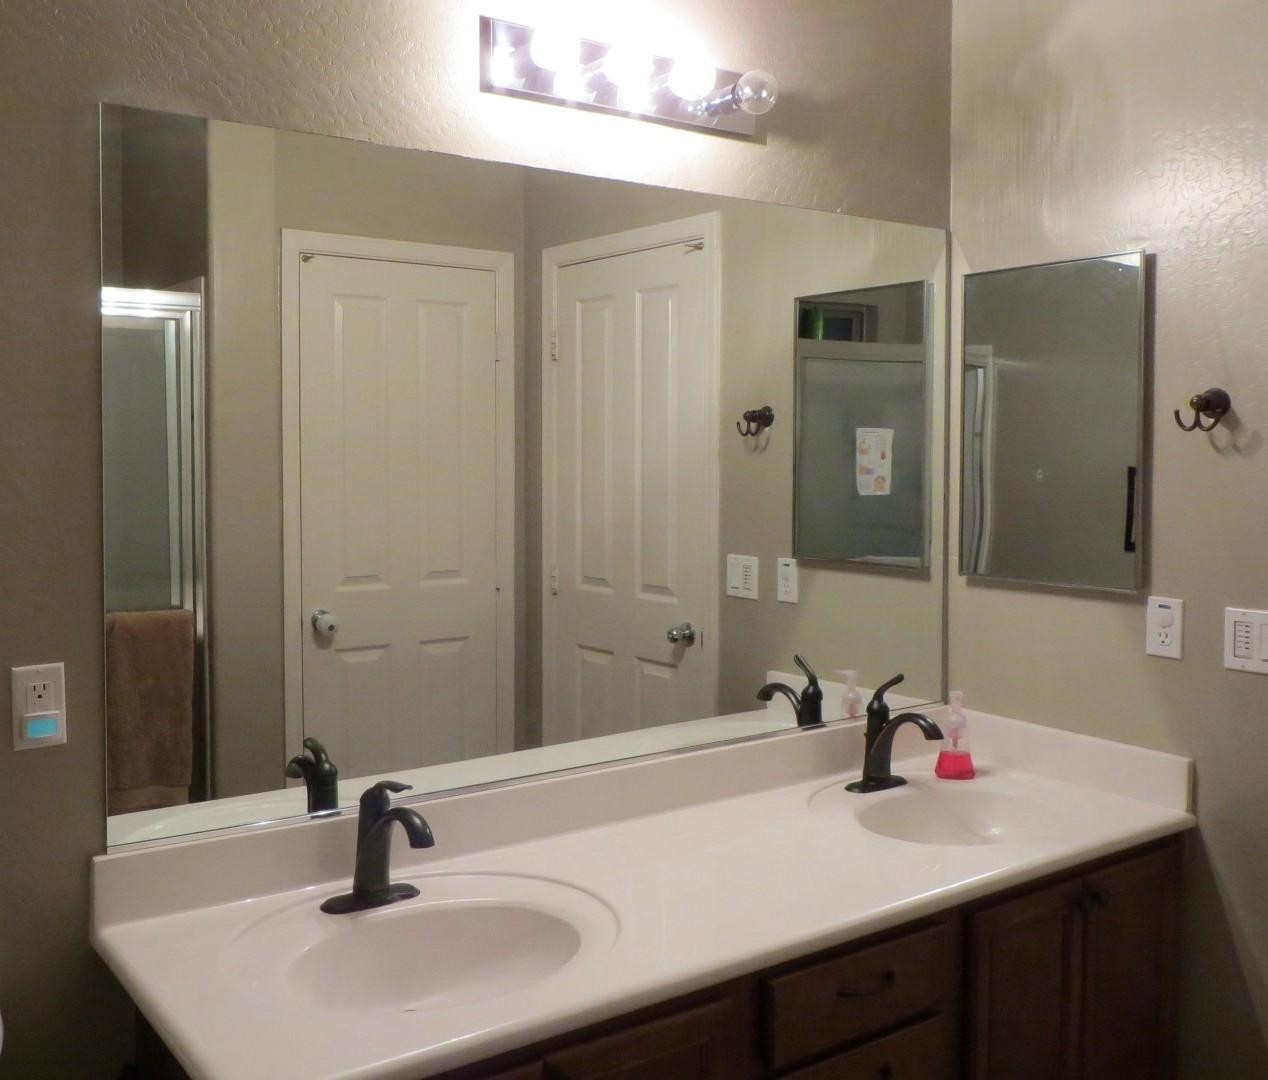 Bathroom Mirror Lowes
 20 Ideas of Mirrors for Bathroom Walls